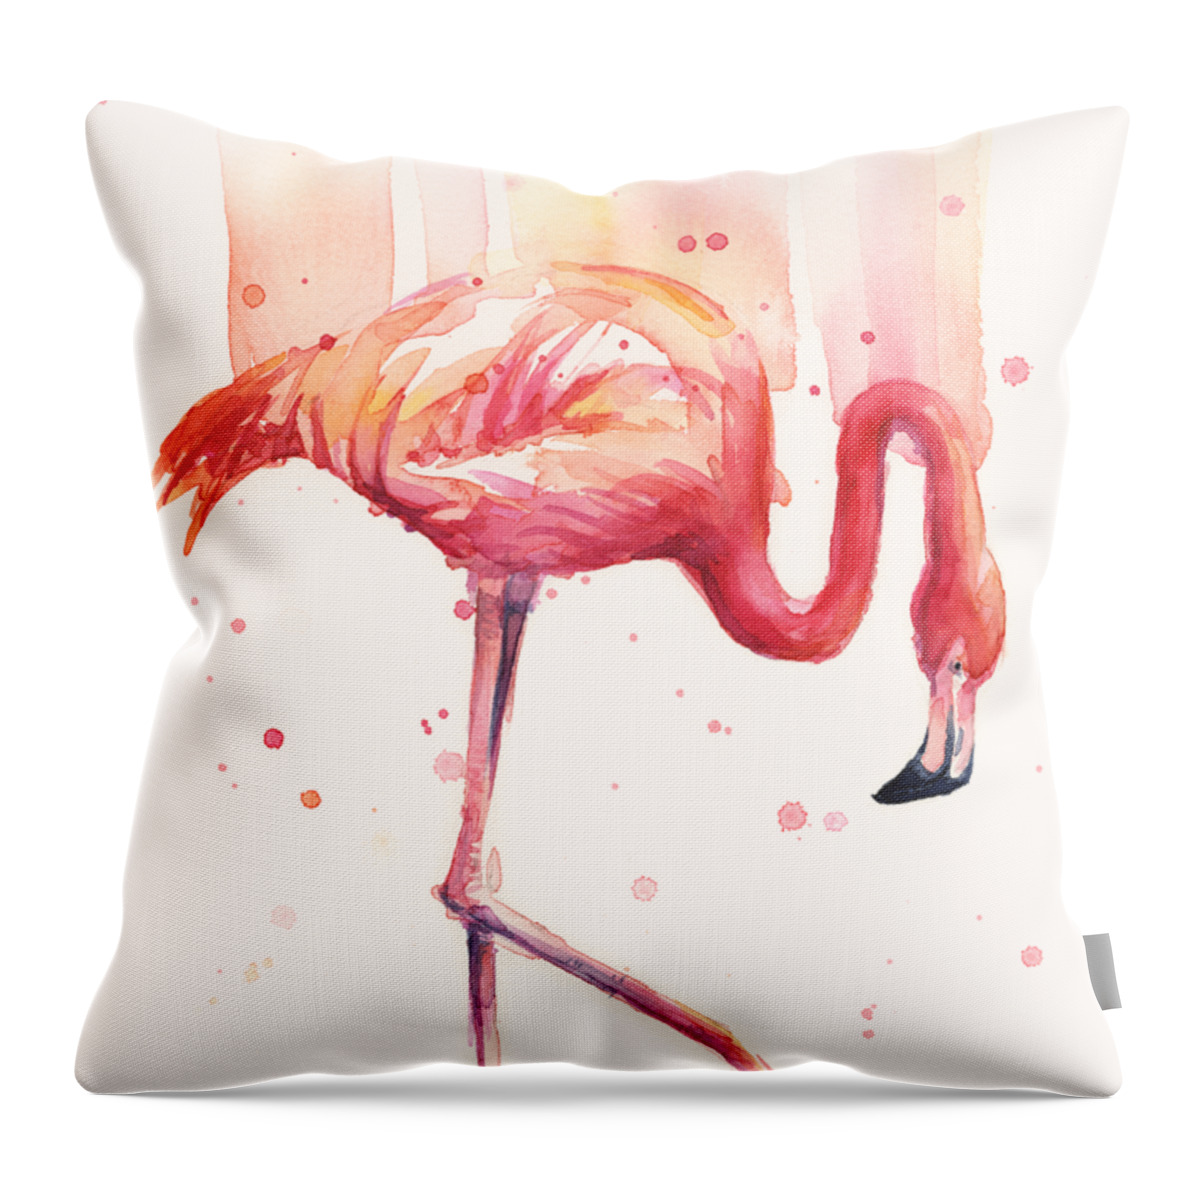 Flamingo Throw Pillow featuring the painting Pink Flamingo Watercolor Rain by Olga Shvartsur